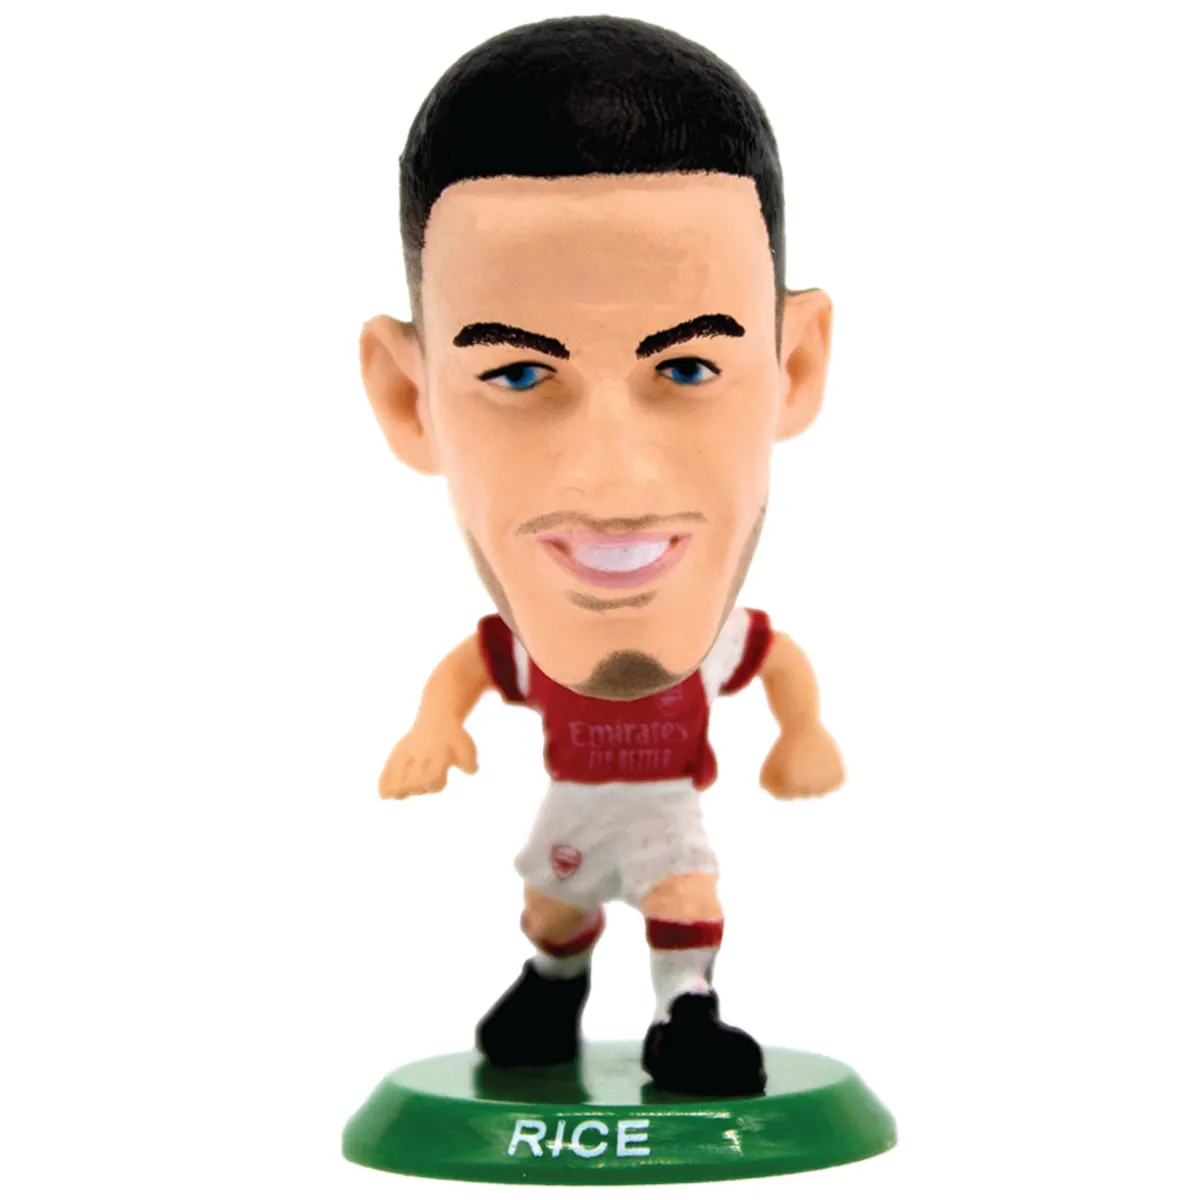 TM-03519 Arsenal FC SoccerStarz Collectable Figure - Declan Rice